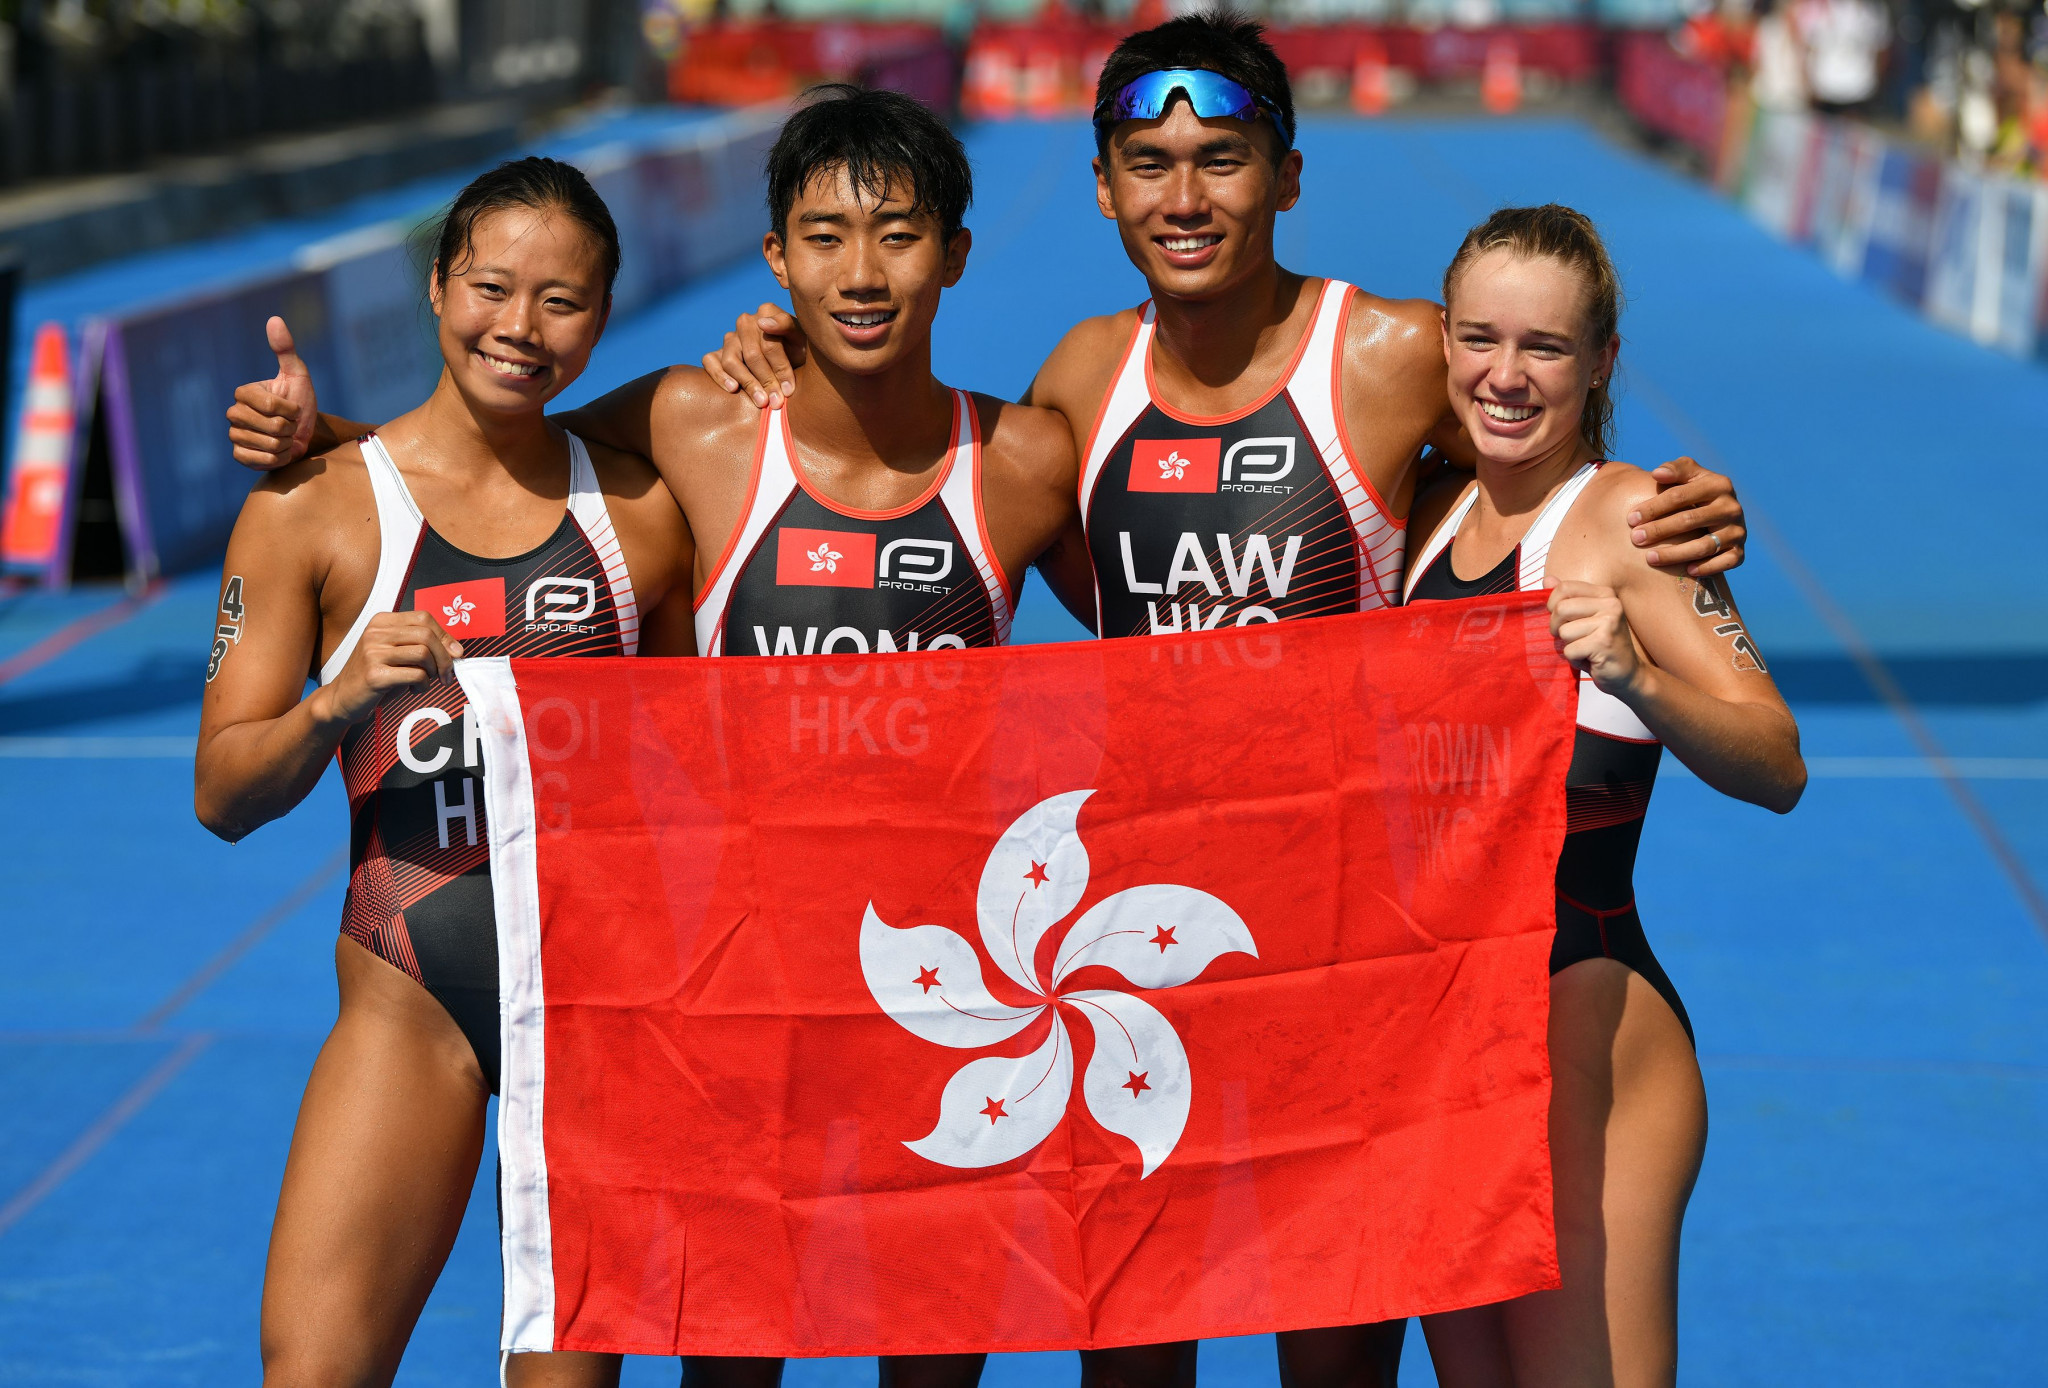 Hong Kong triathlon coaches depart amid report of lockdown breaches